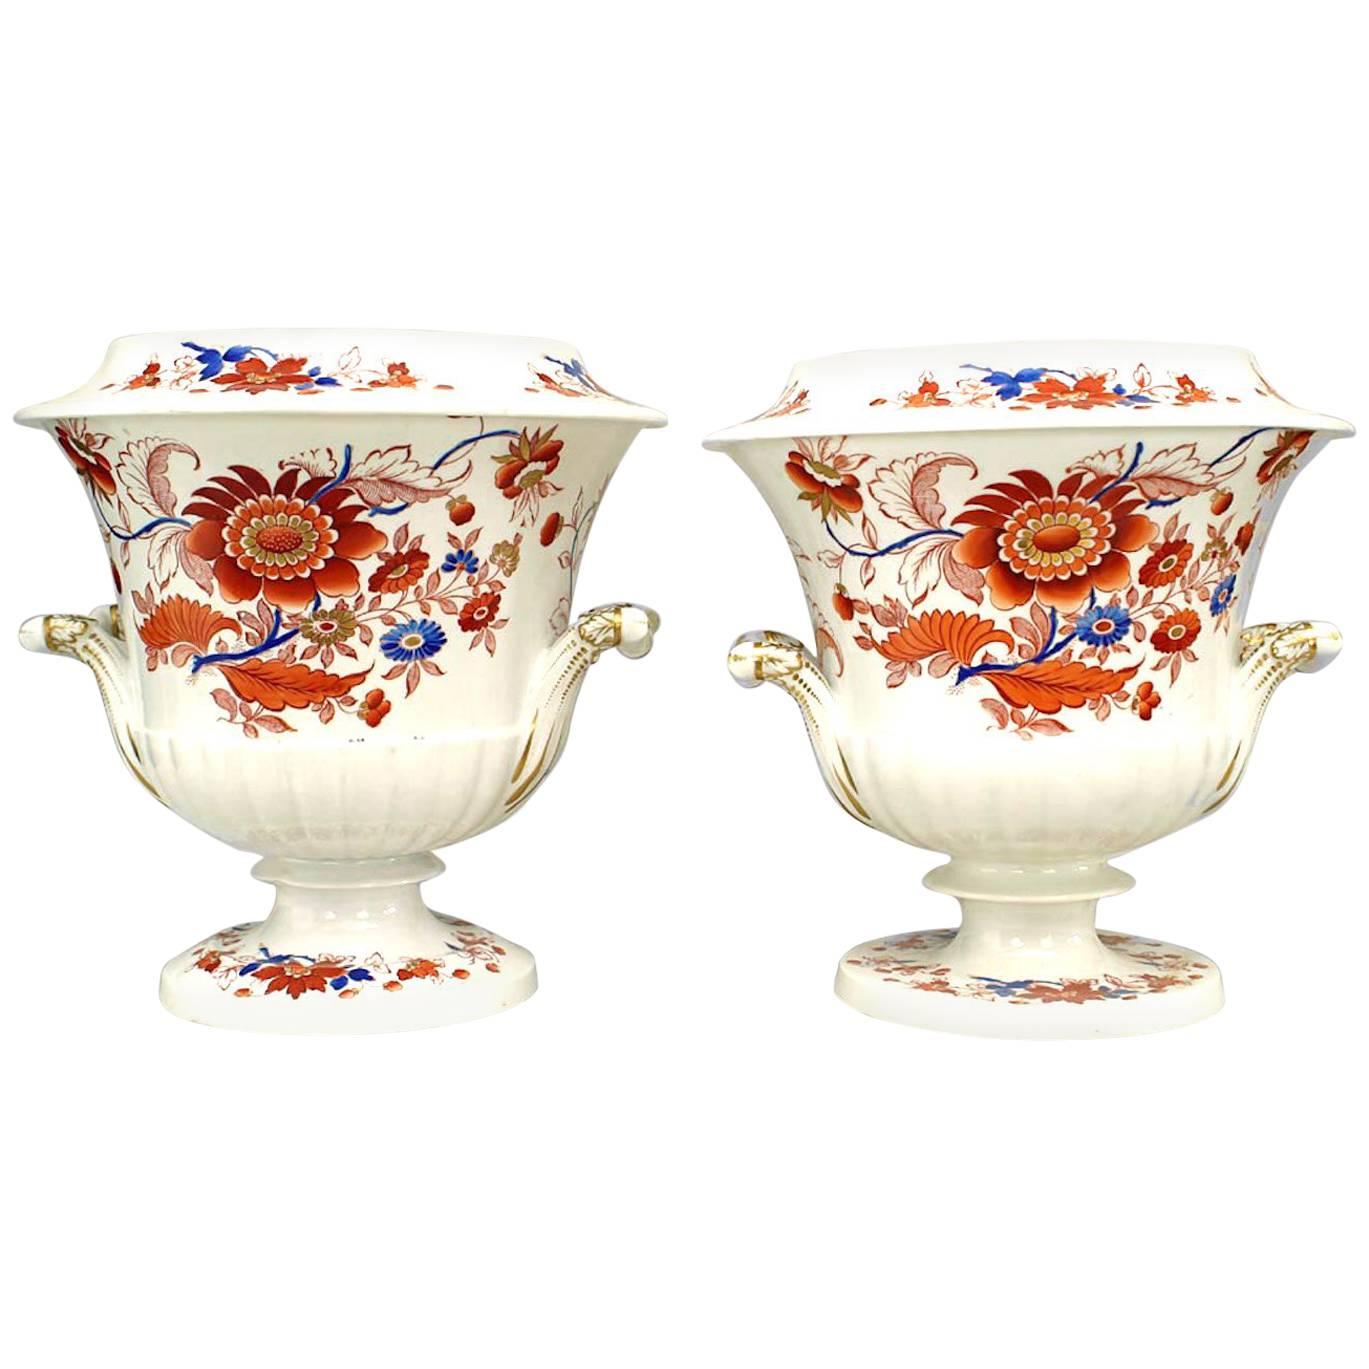 Pair of German Lowenstaff Floral Porcelain Urns For Sale